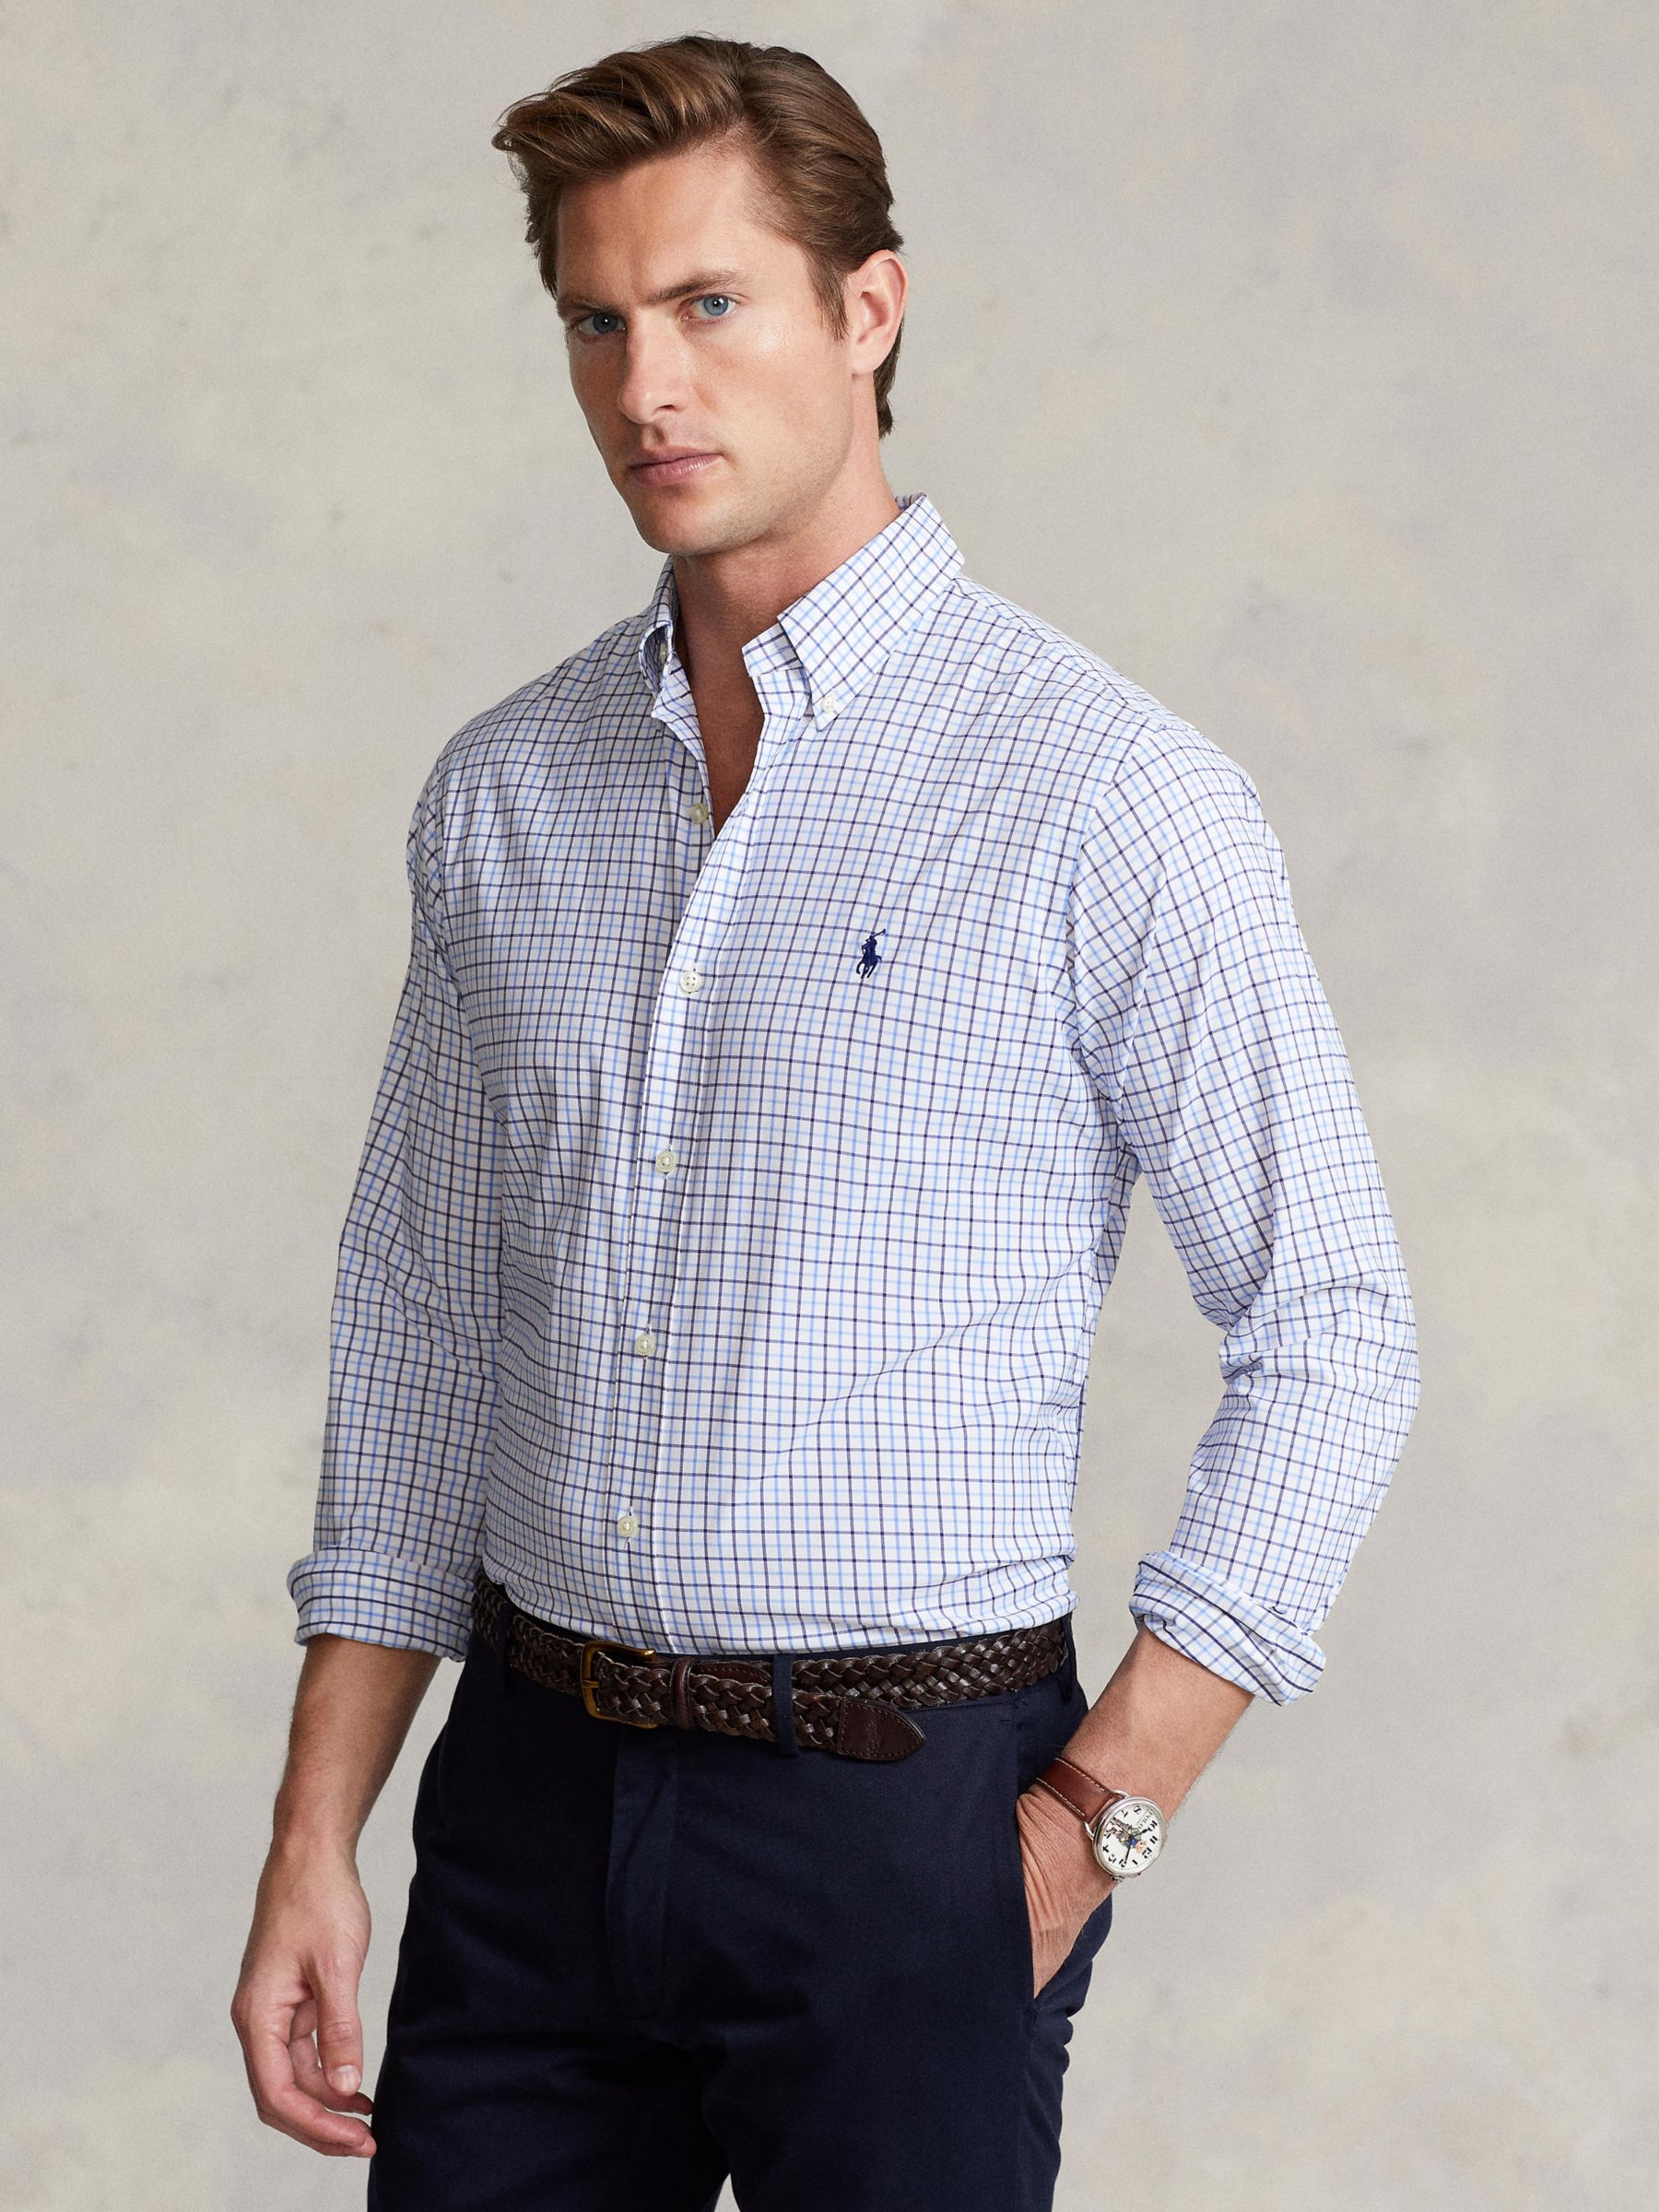 Striped Oxford shirt Modern fit, Le 31